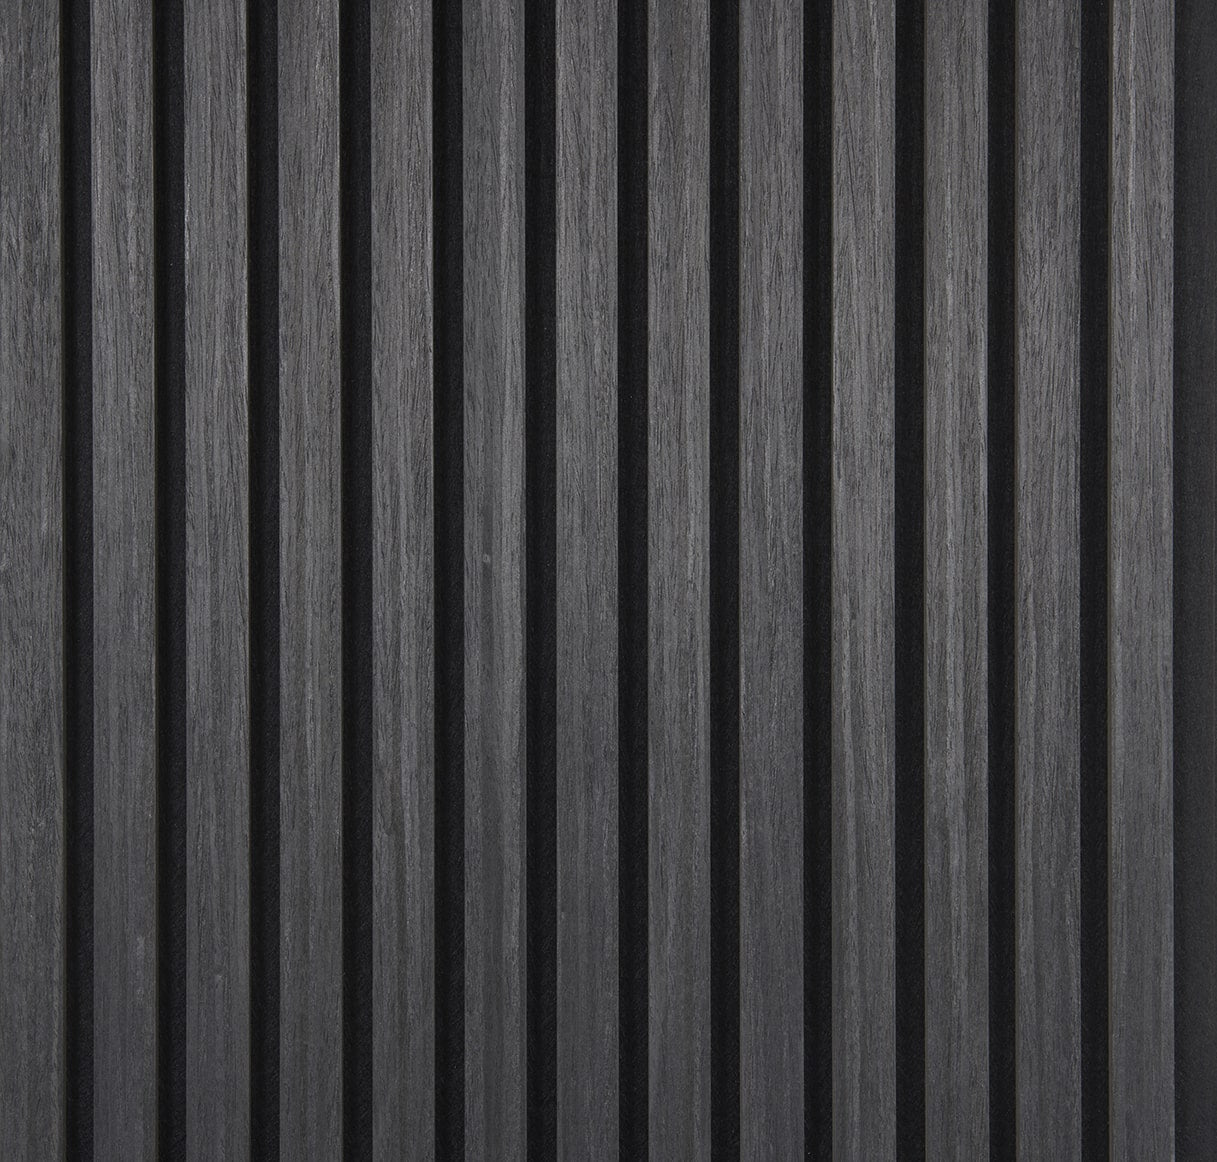 Acoustic Wood Panels 244x52 cm Harmony Max - Black Oak